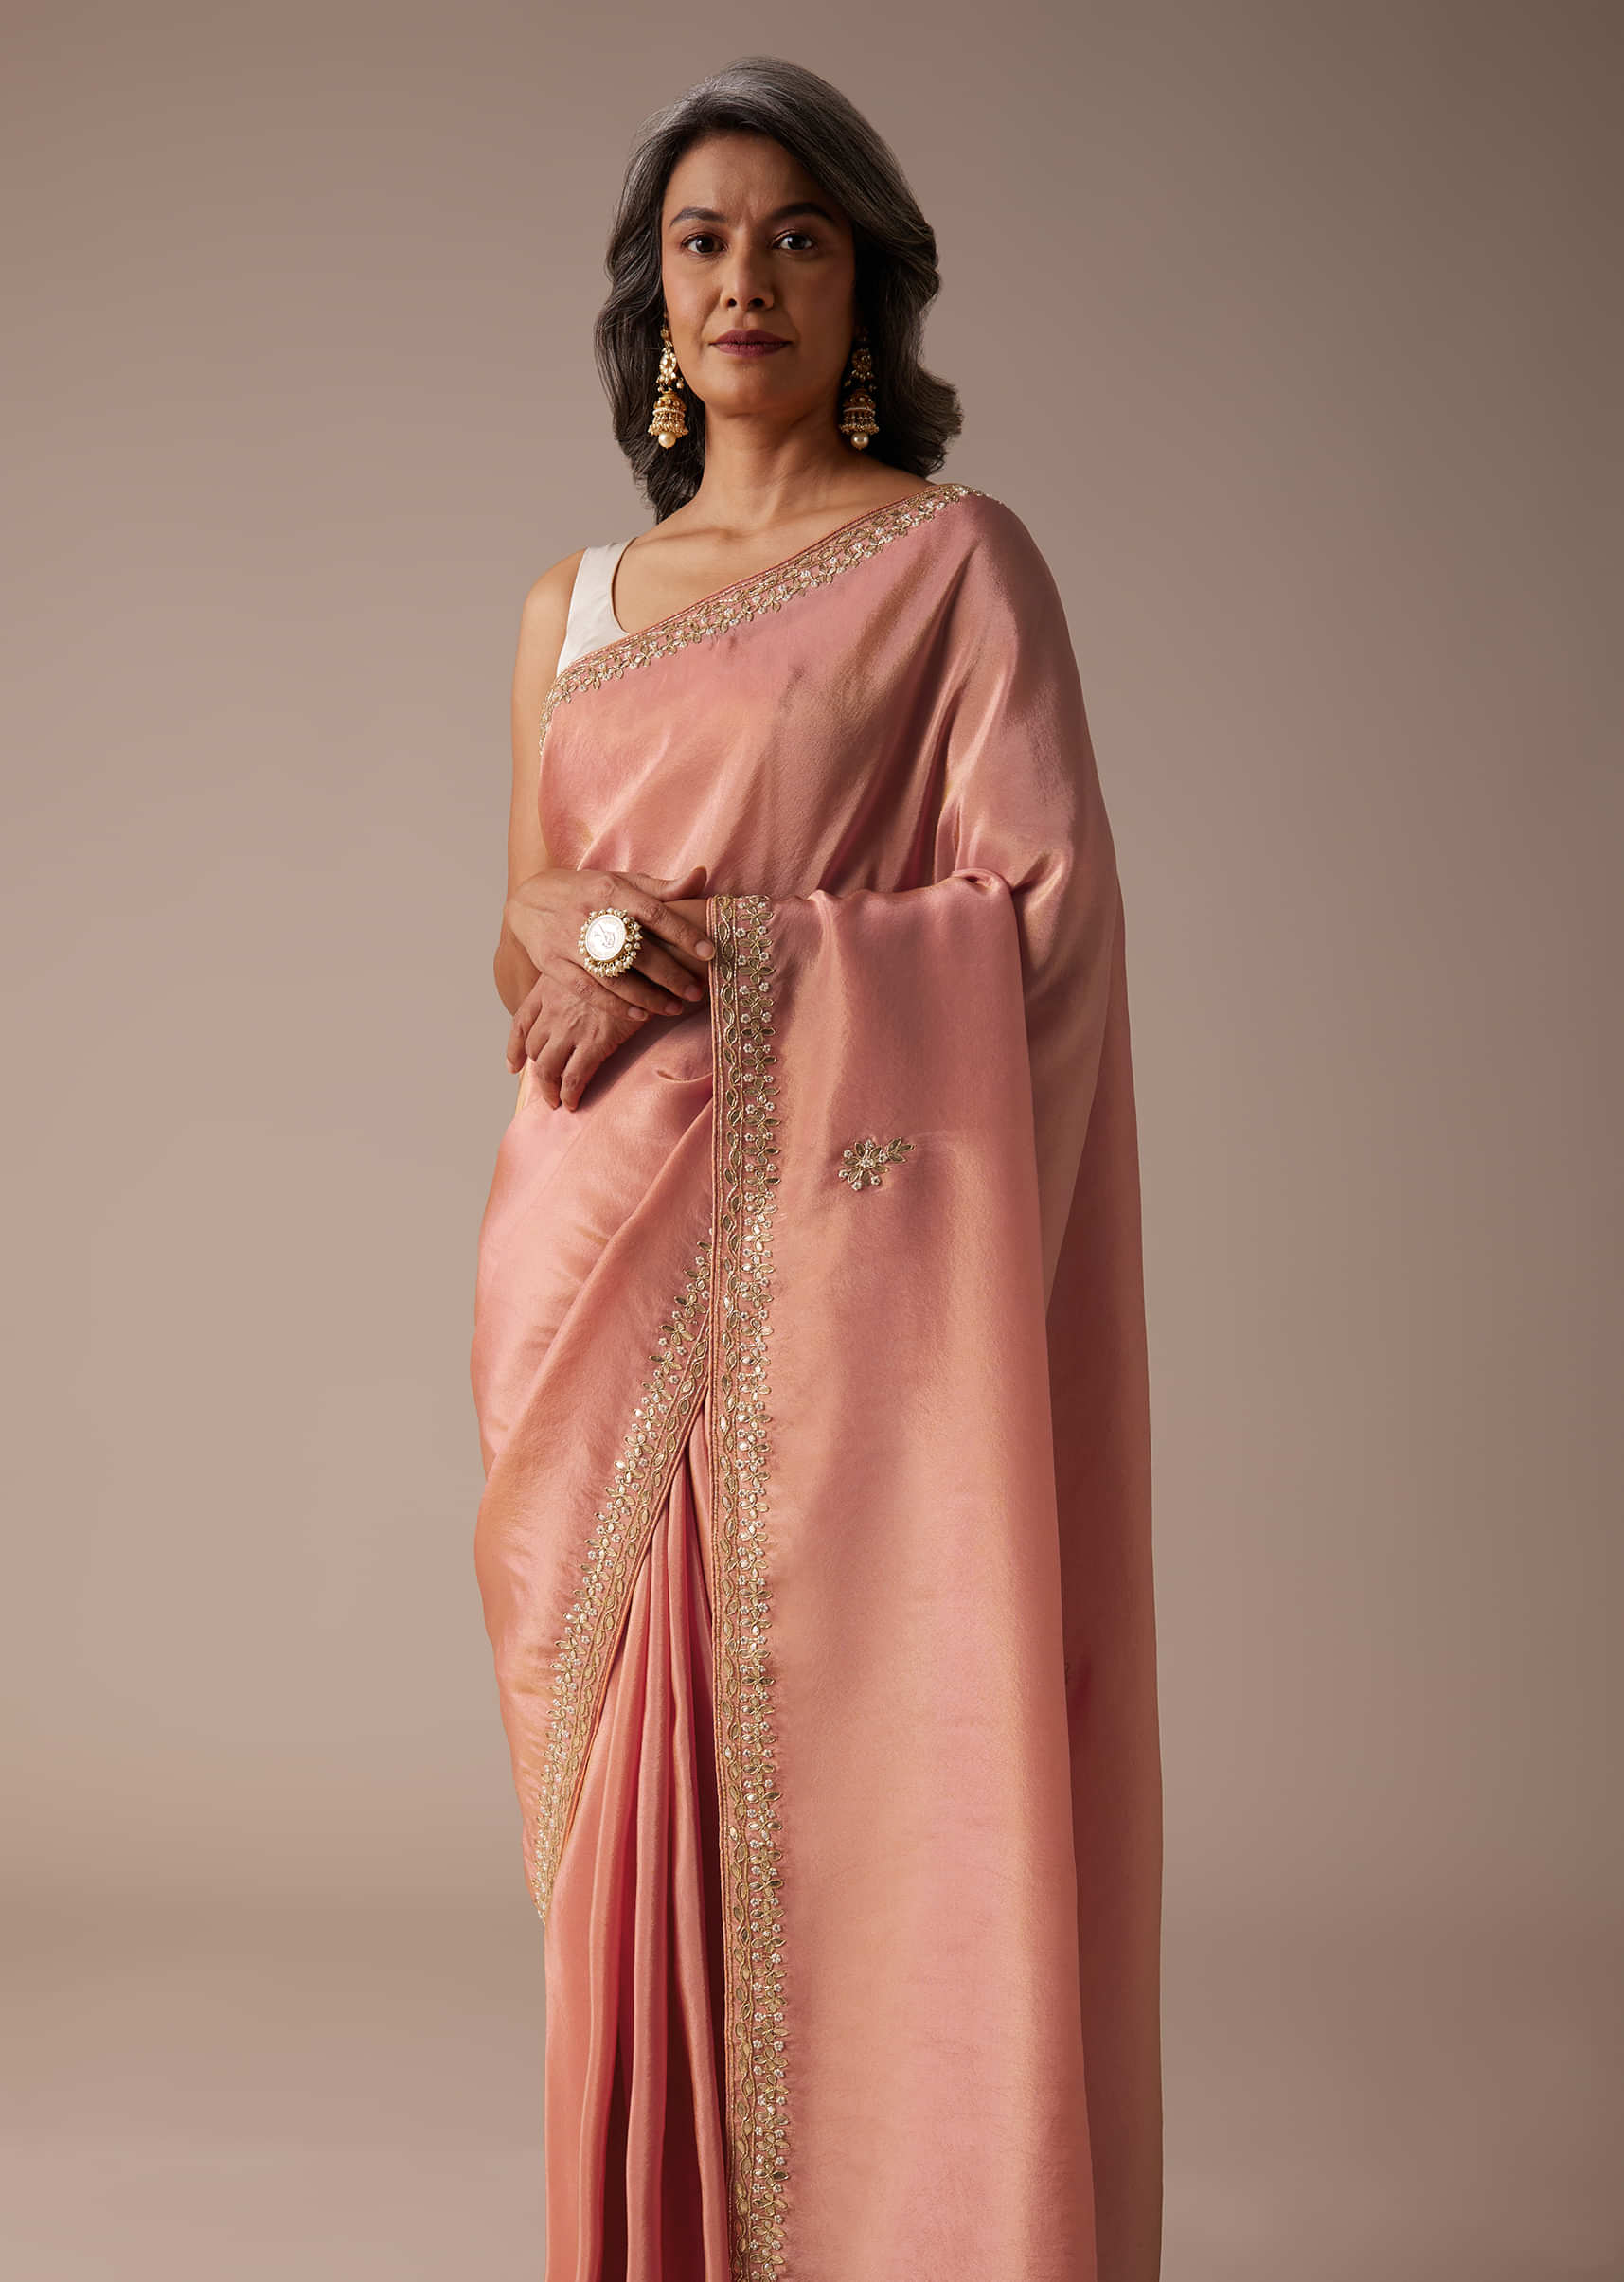 Apricot Blush Saree In Dupion Silk With Gotta Patti Embroidered Floral Buttis And Border Design  